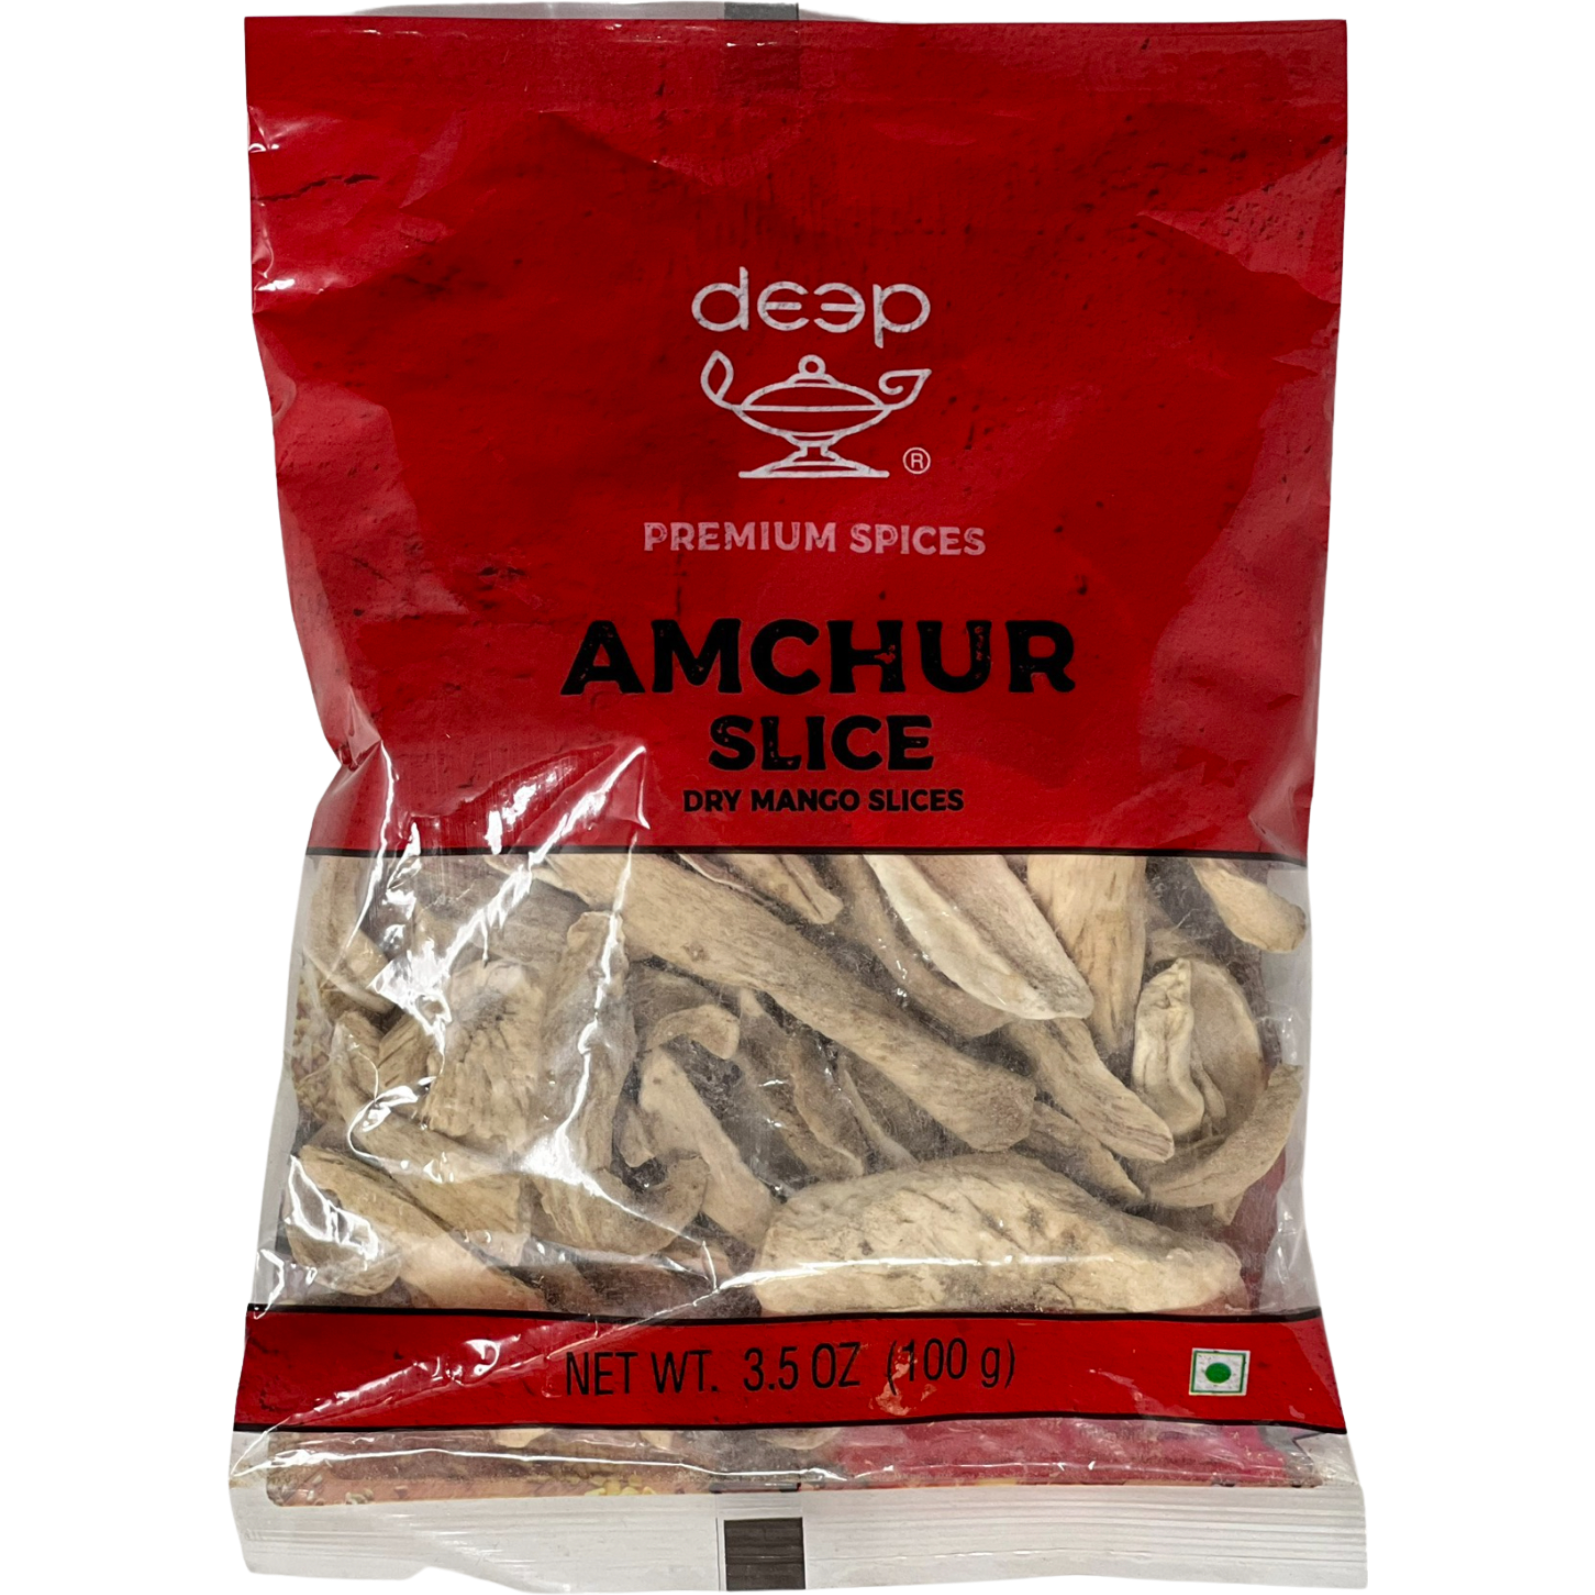 Deep Amchur Slice Dry Mango Slices - 100 Gm (3.5 Oz)